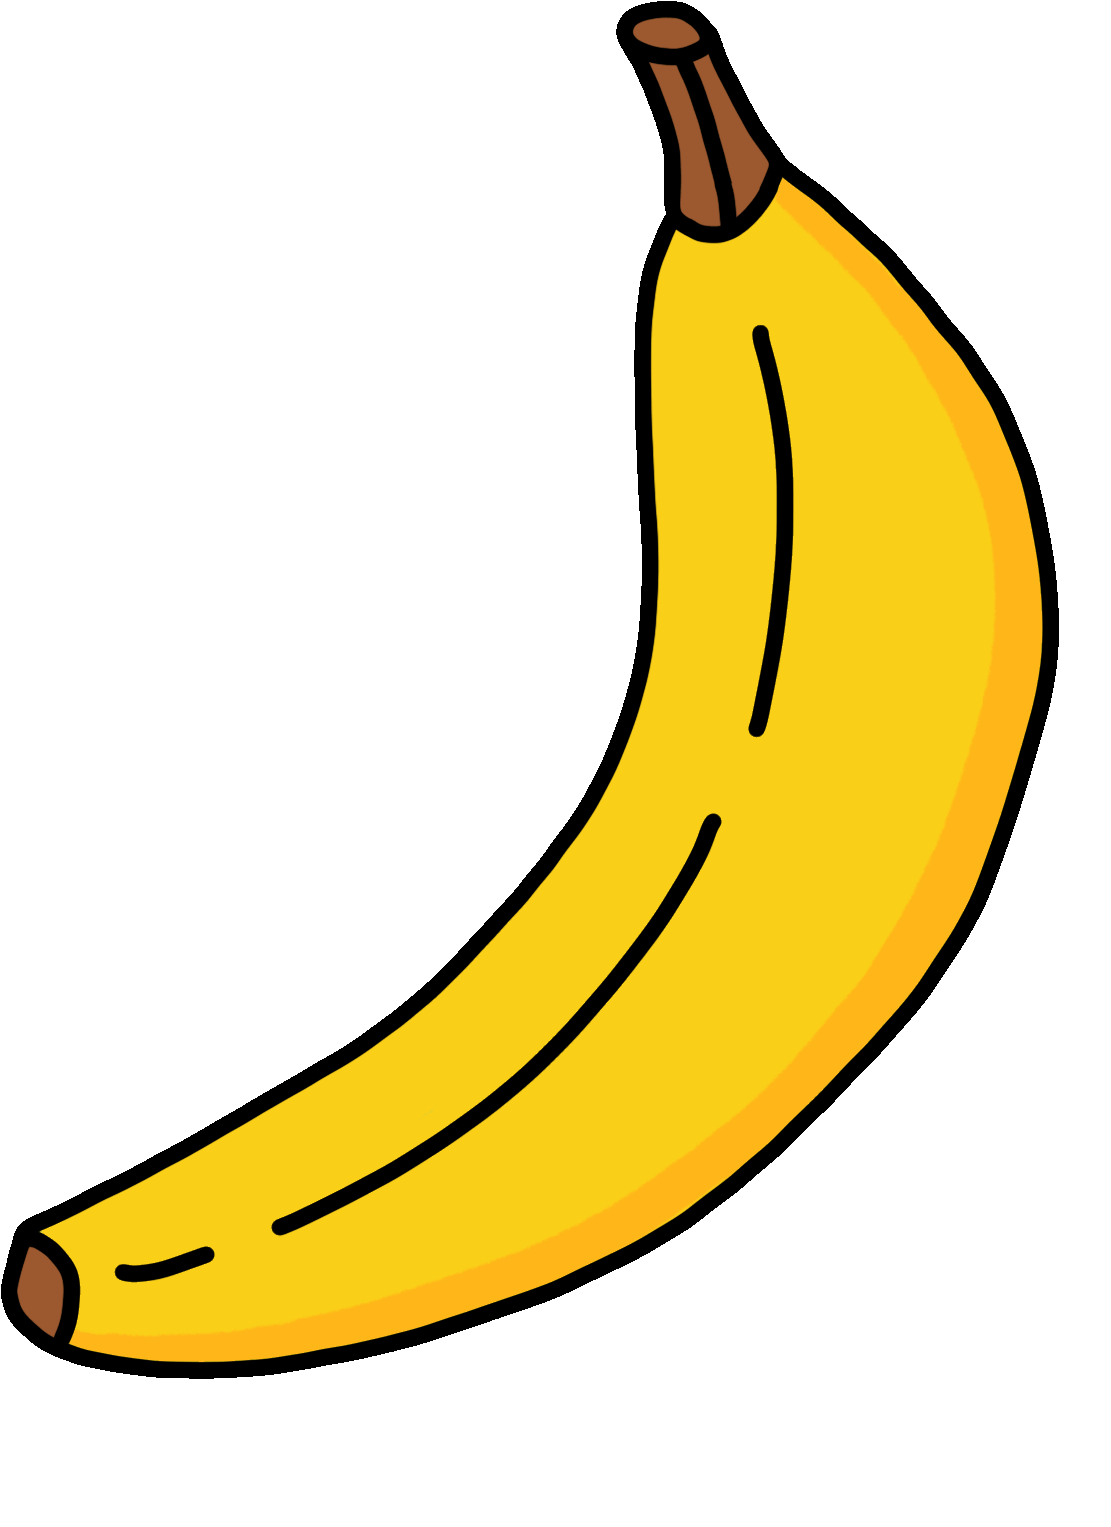 Illustration Banana  Sticker by Idil Keysan for iOS 